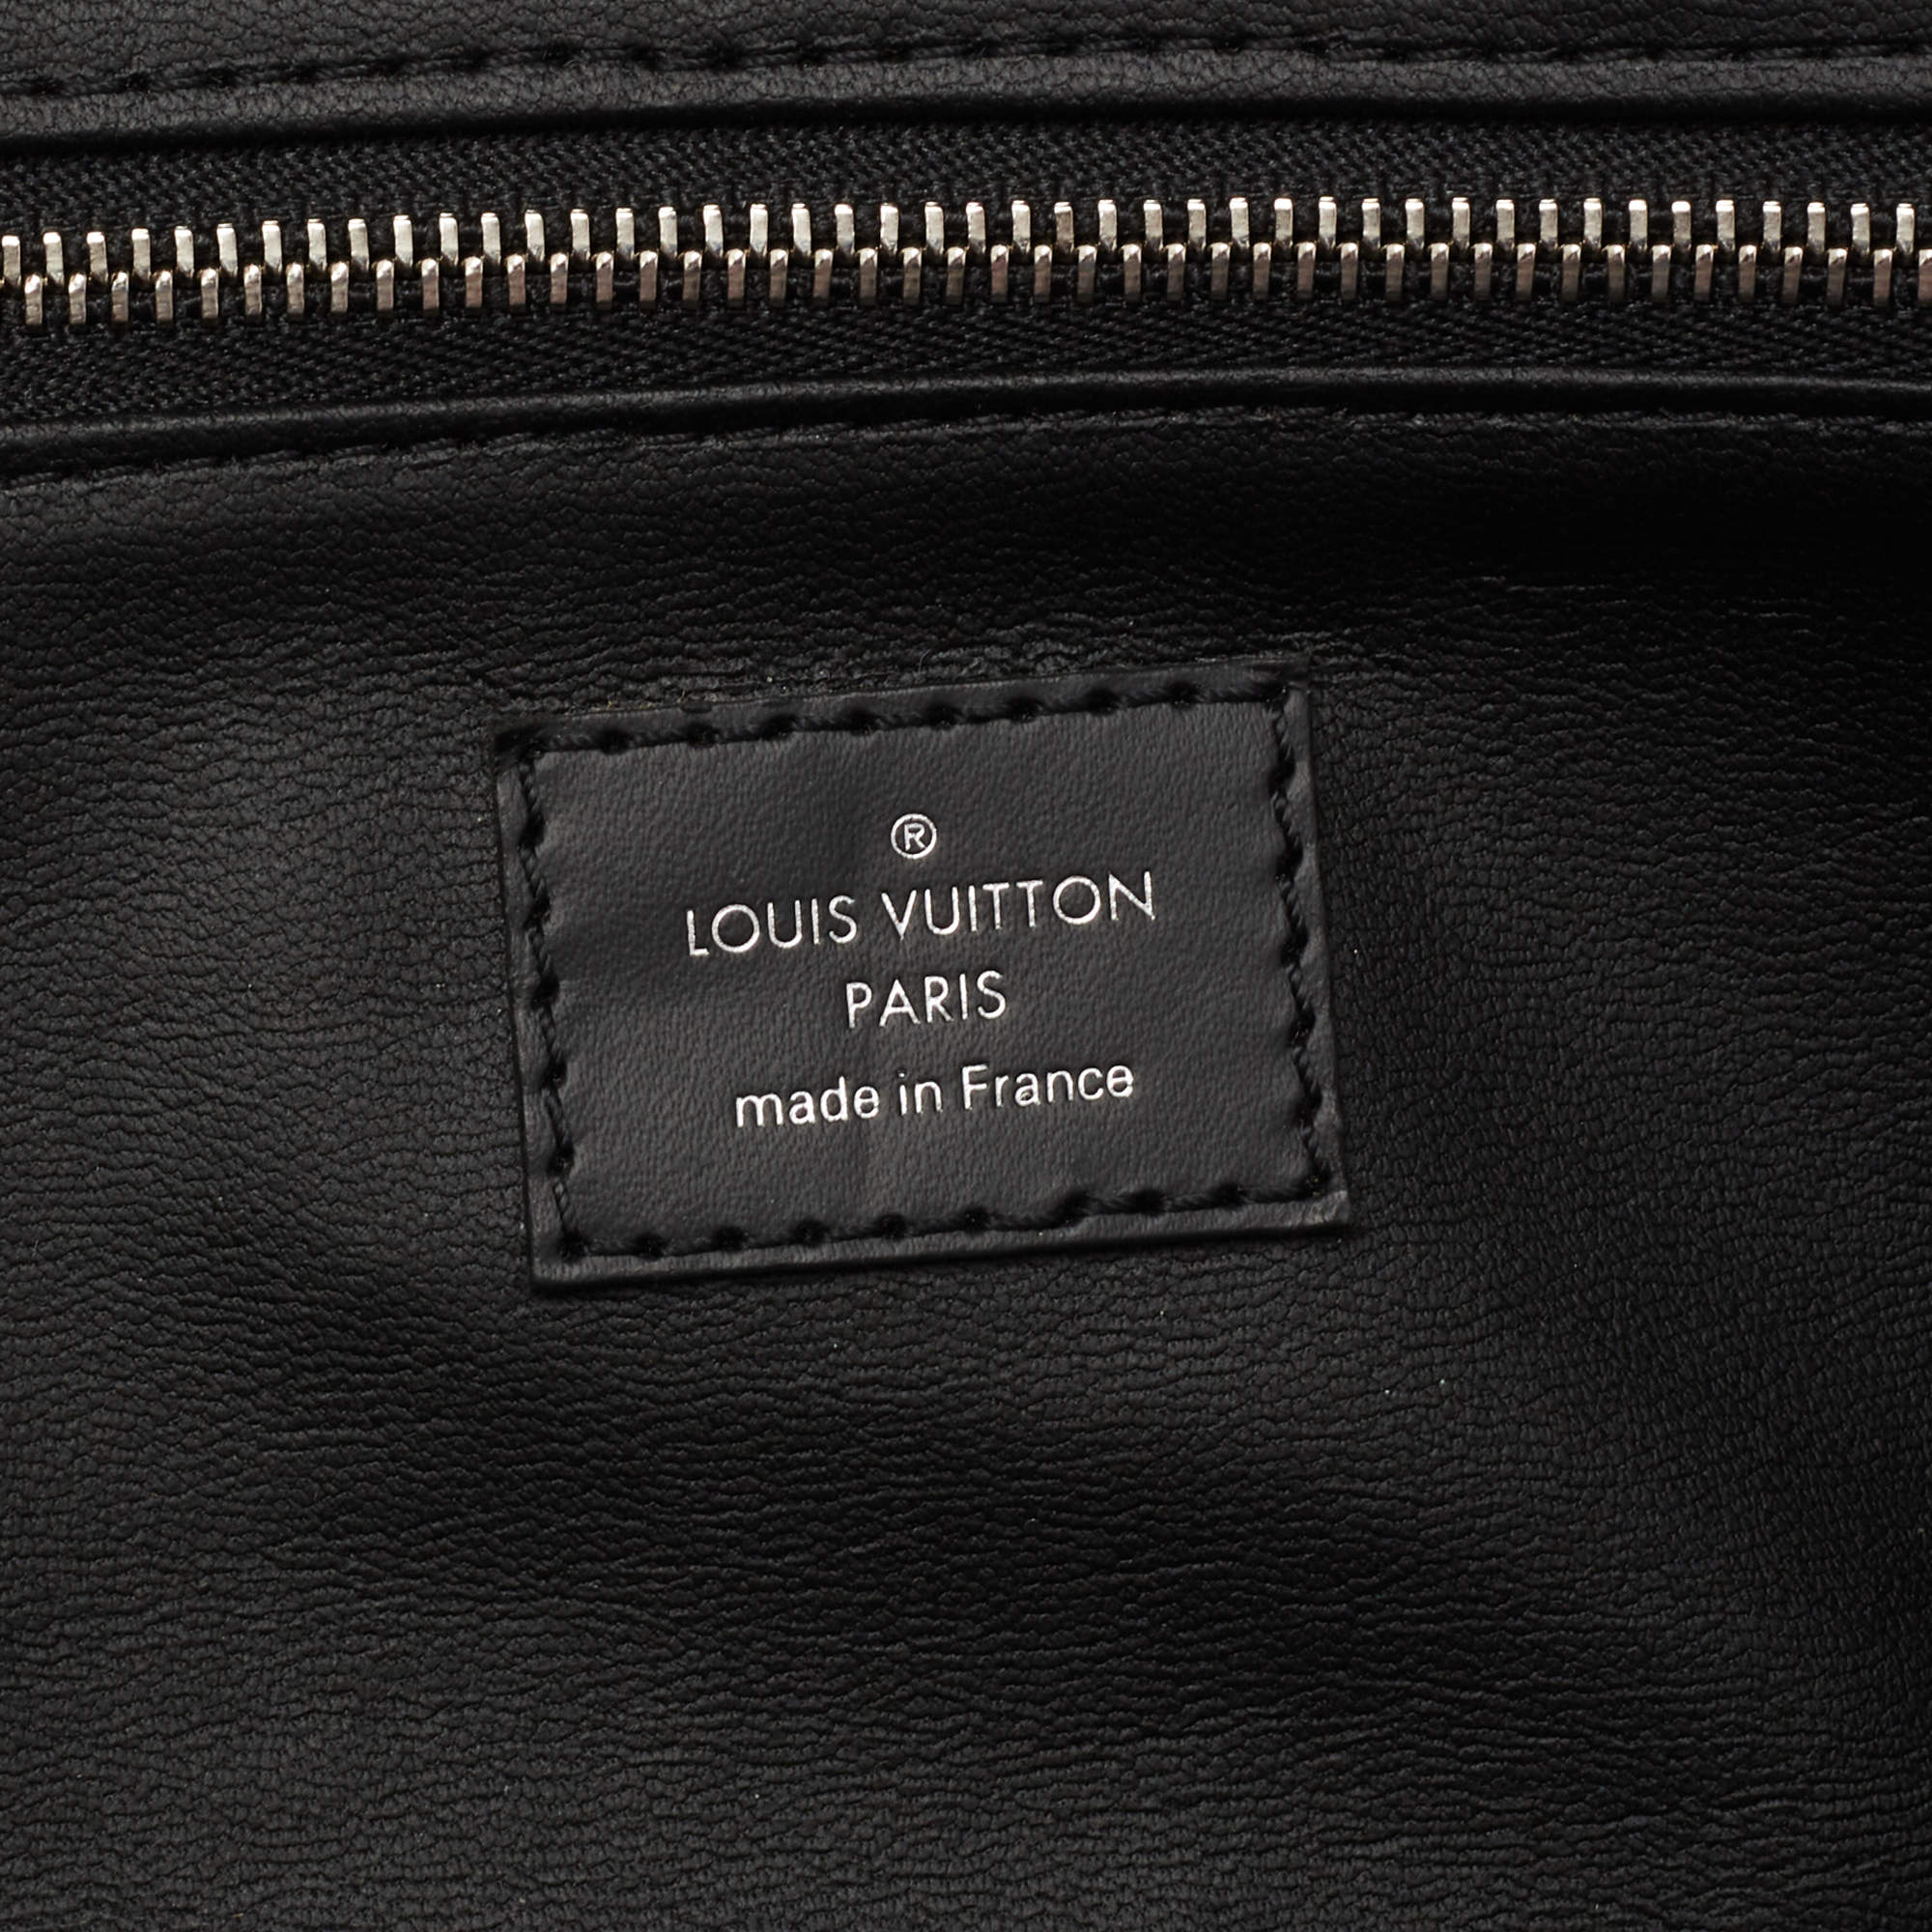 Shop Louis Vuitton DAMIER GRAPHITE Dopp kit toilet pouch (N40127) by Leeway